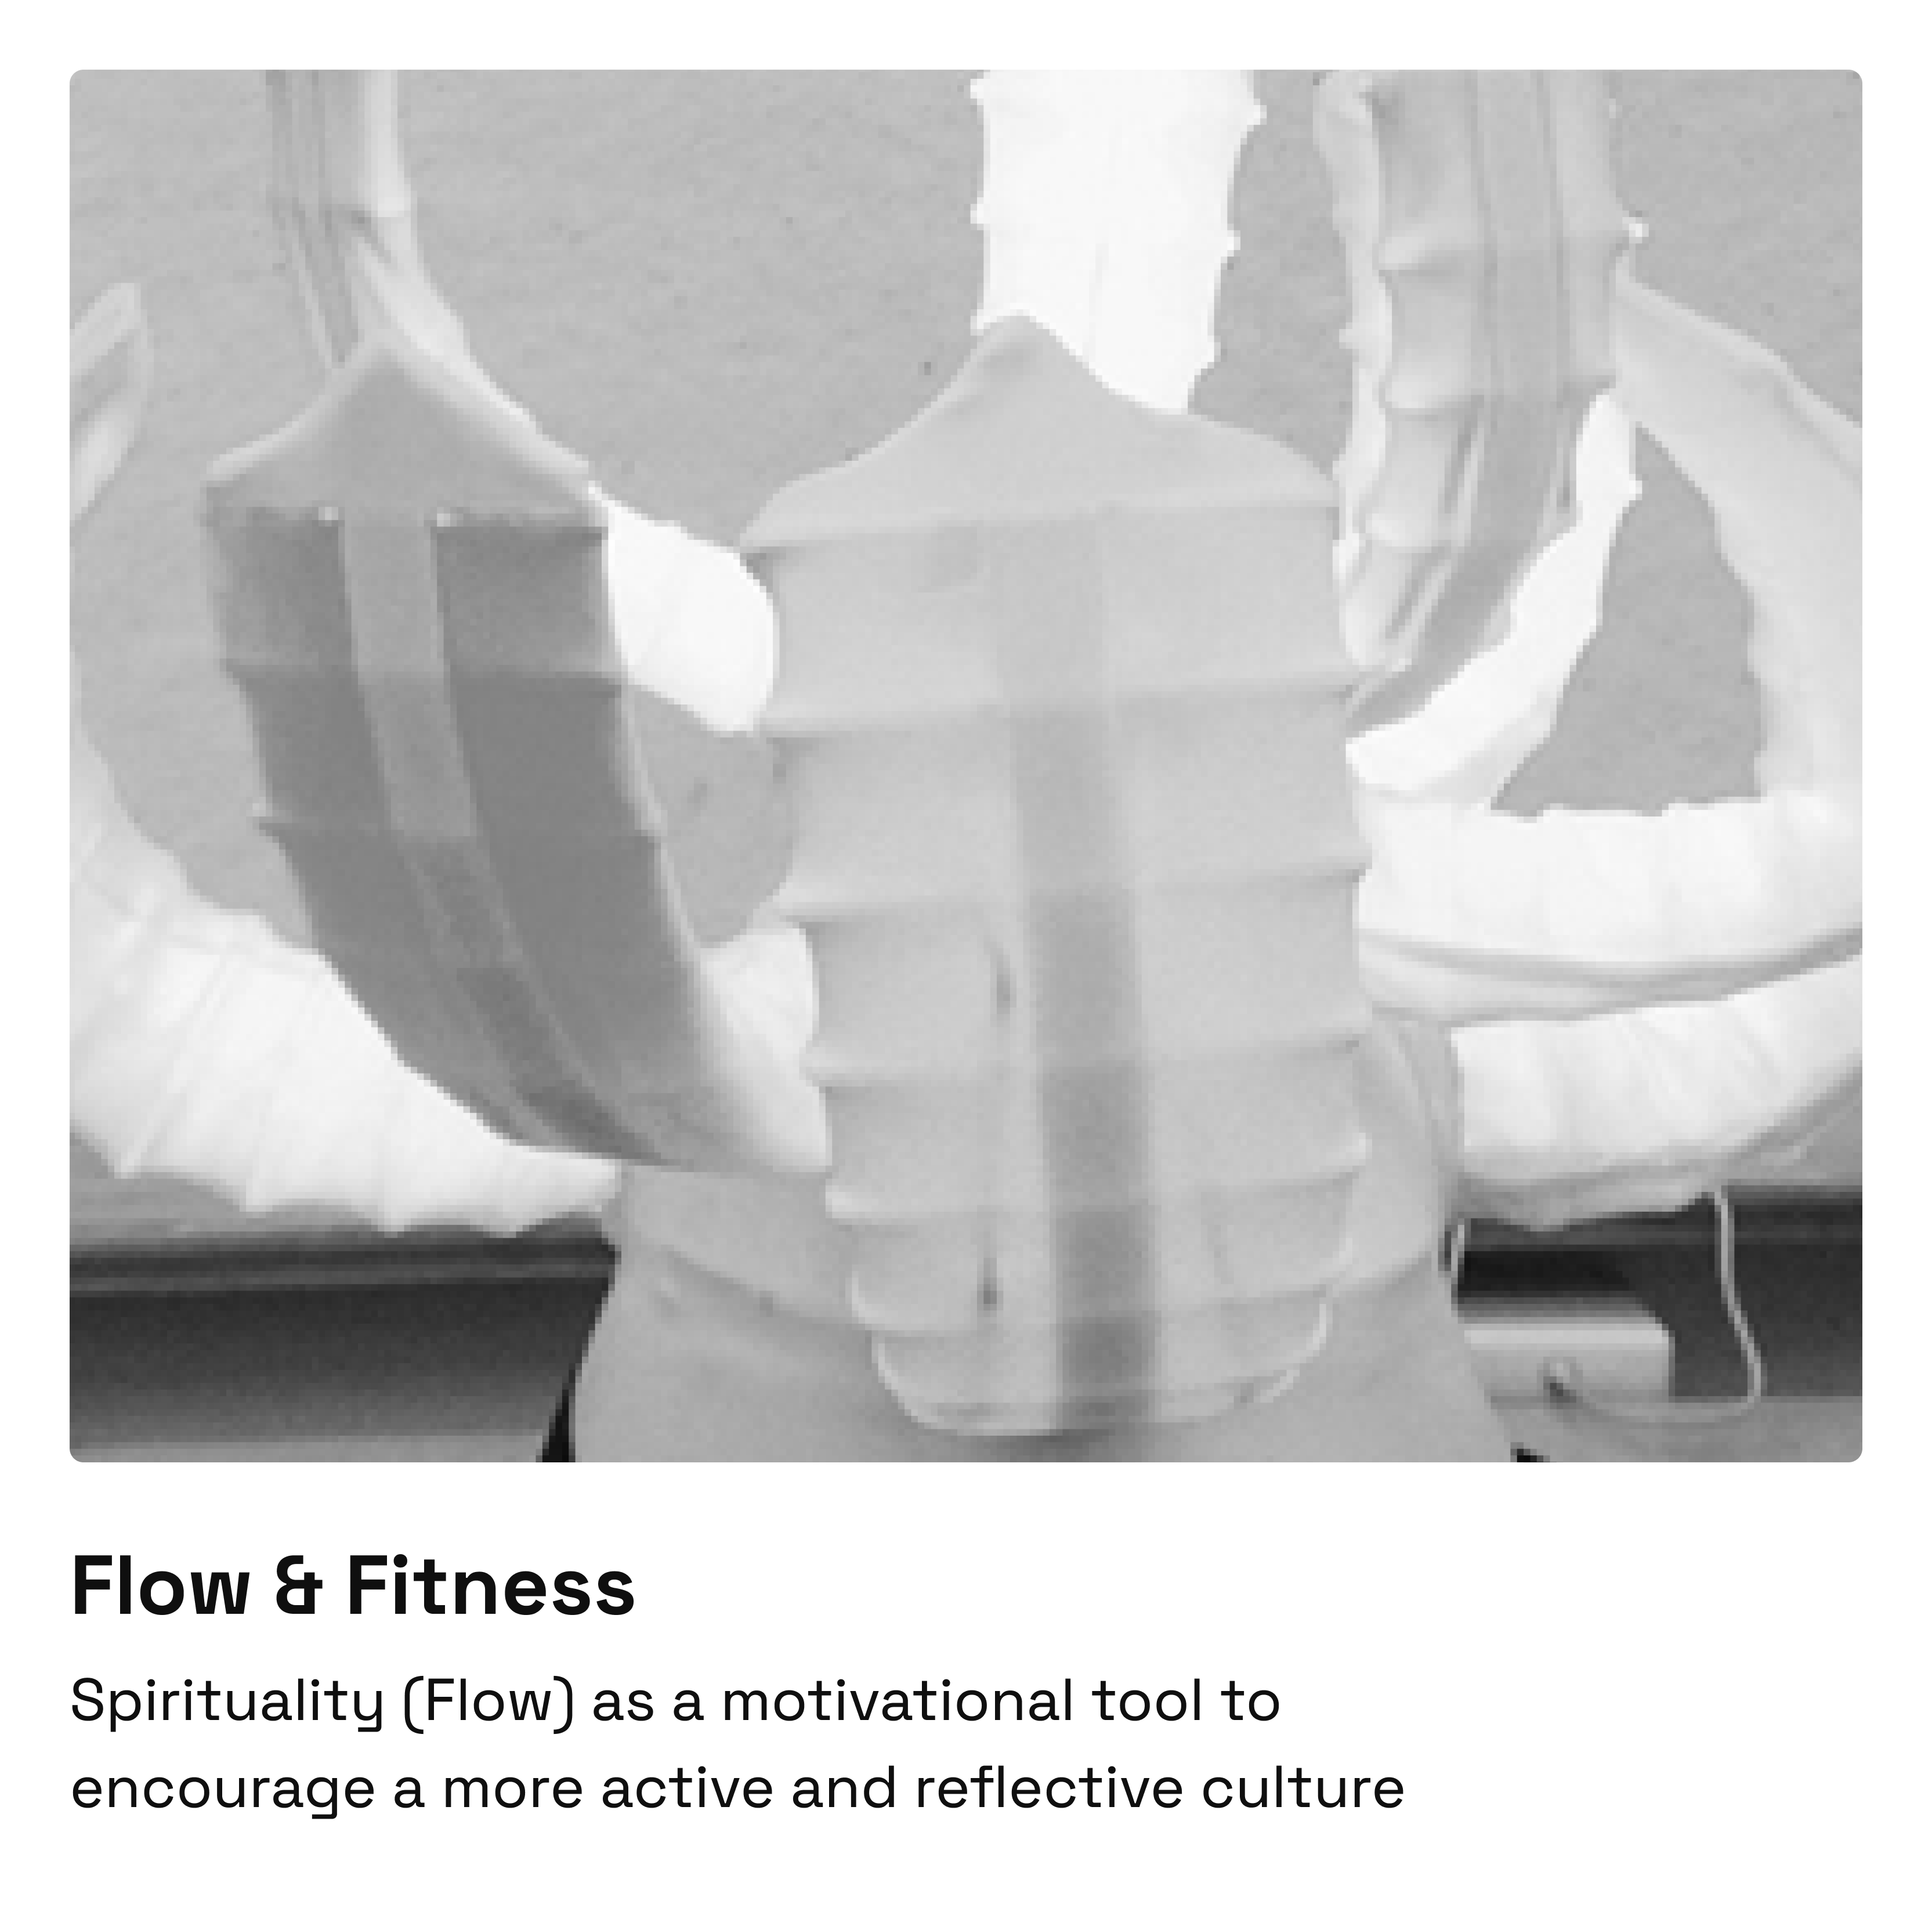 Flow & Fitness